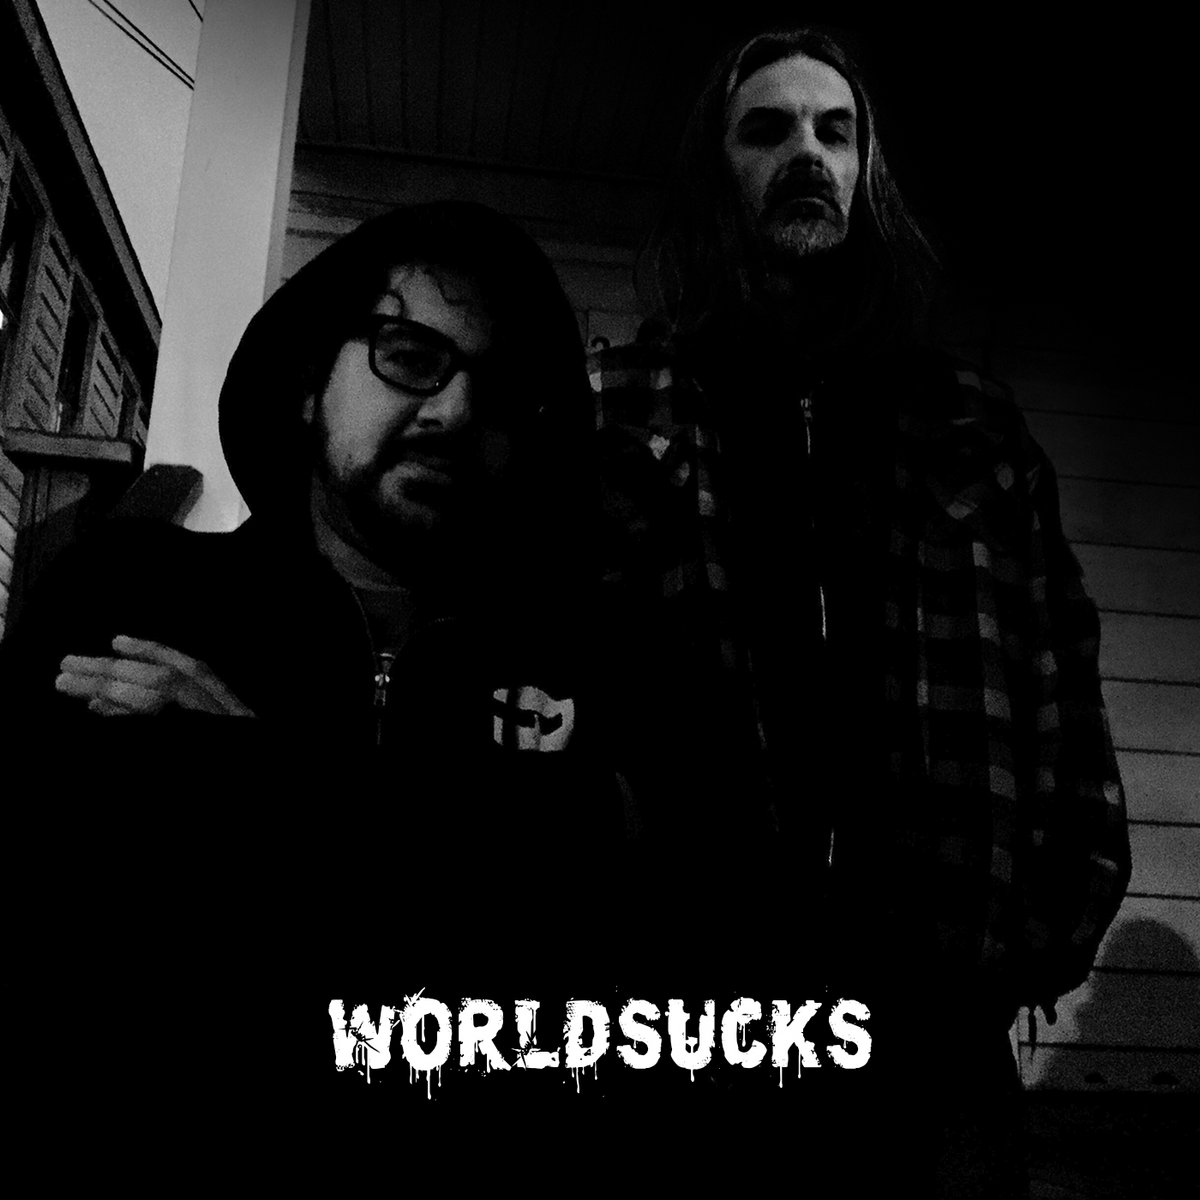 Worldsucks - Warning you with peace and love album art